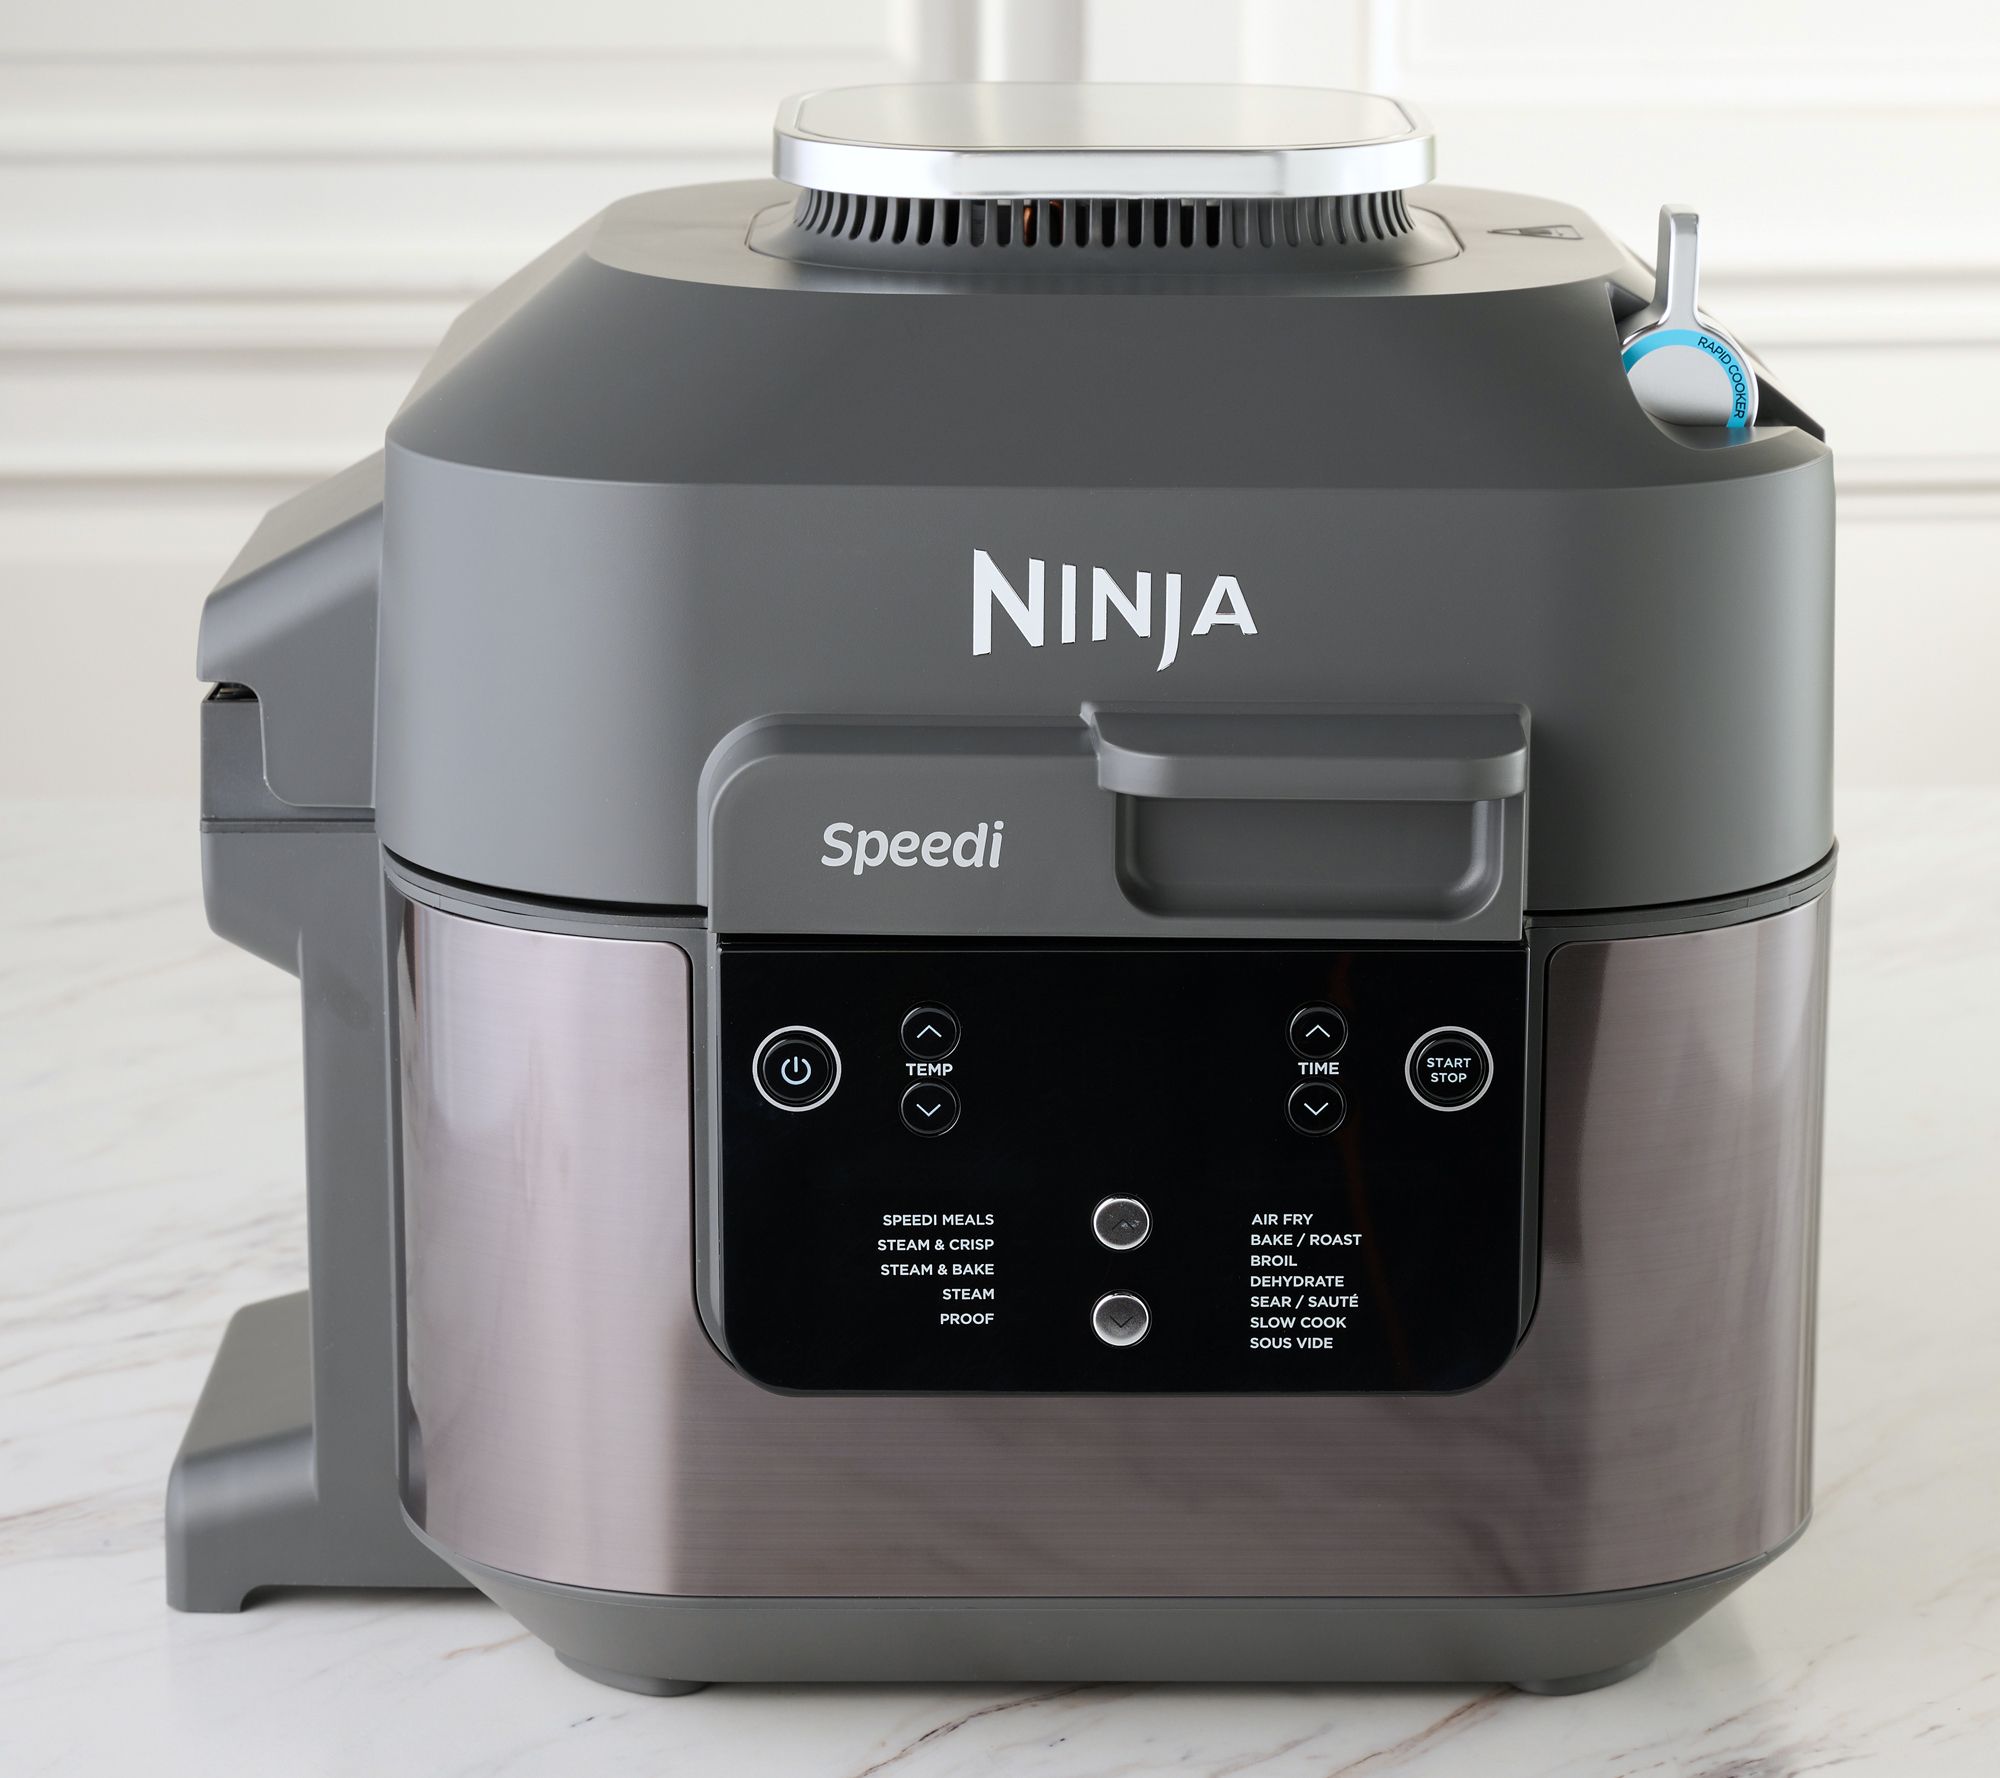 Ninja Speedi Rapid Cooker Review: Full Meal in 15 Minutes? 